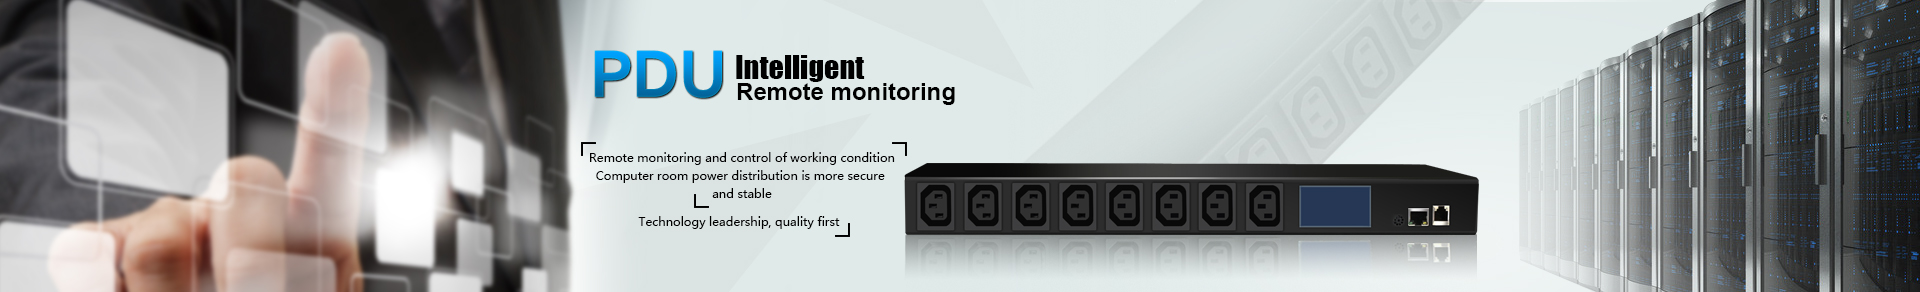 Intelligent Remote Monitoring PDU